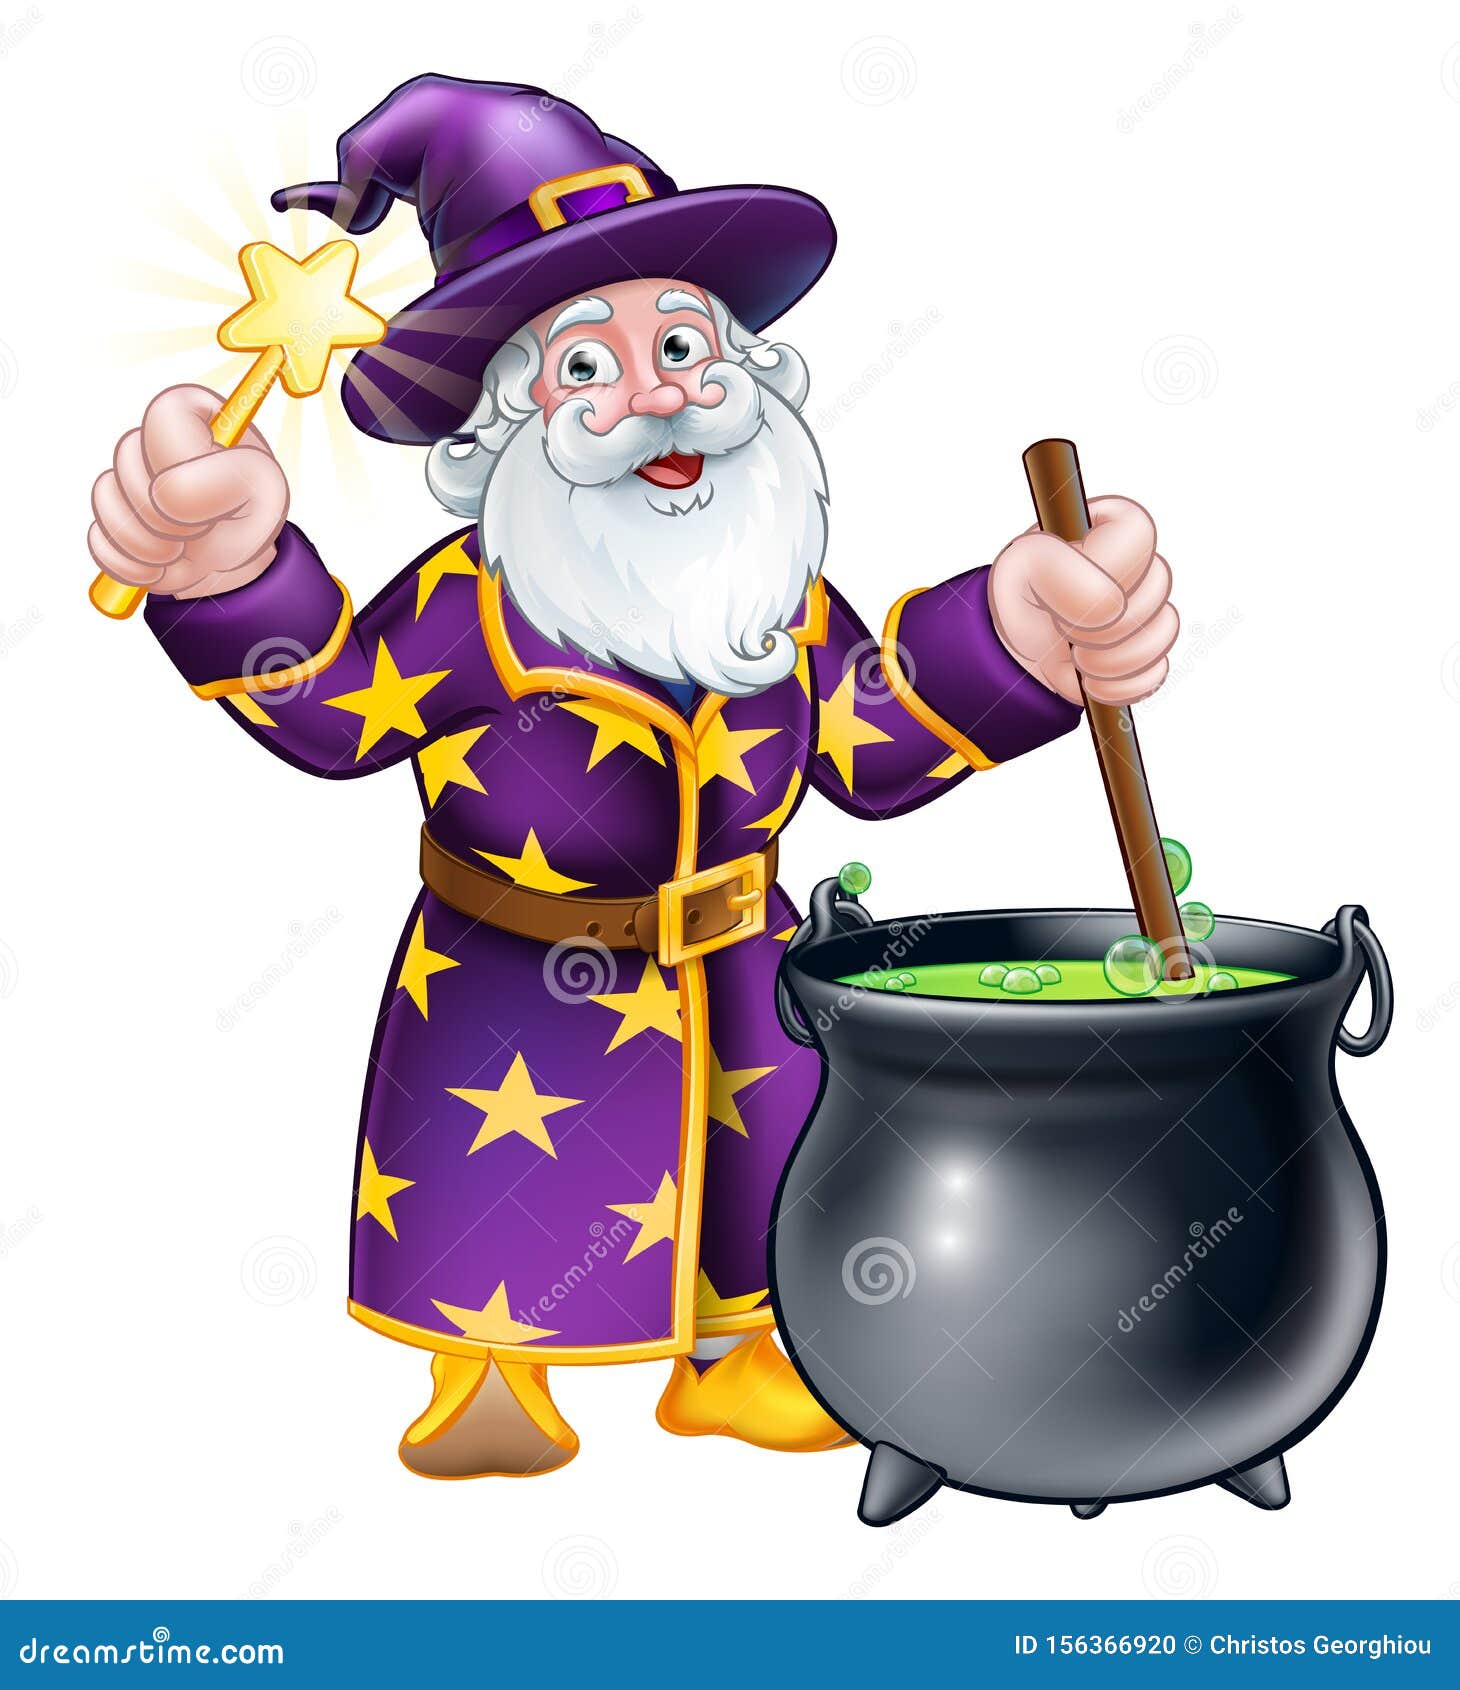 Wizard With Wand And Cauldron Cartoon Stock Vector ...